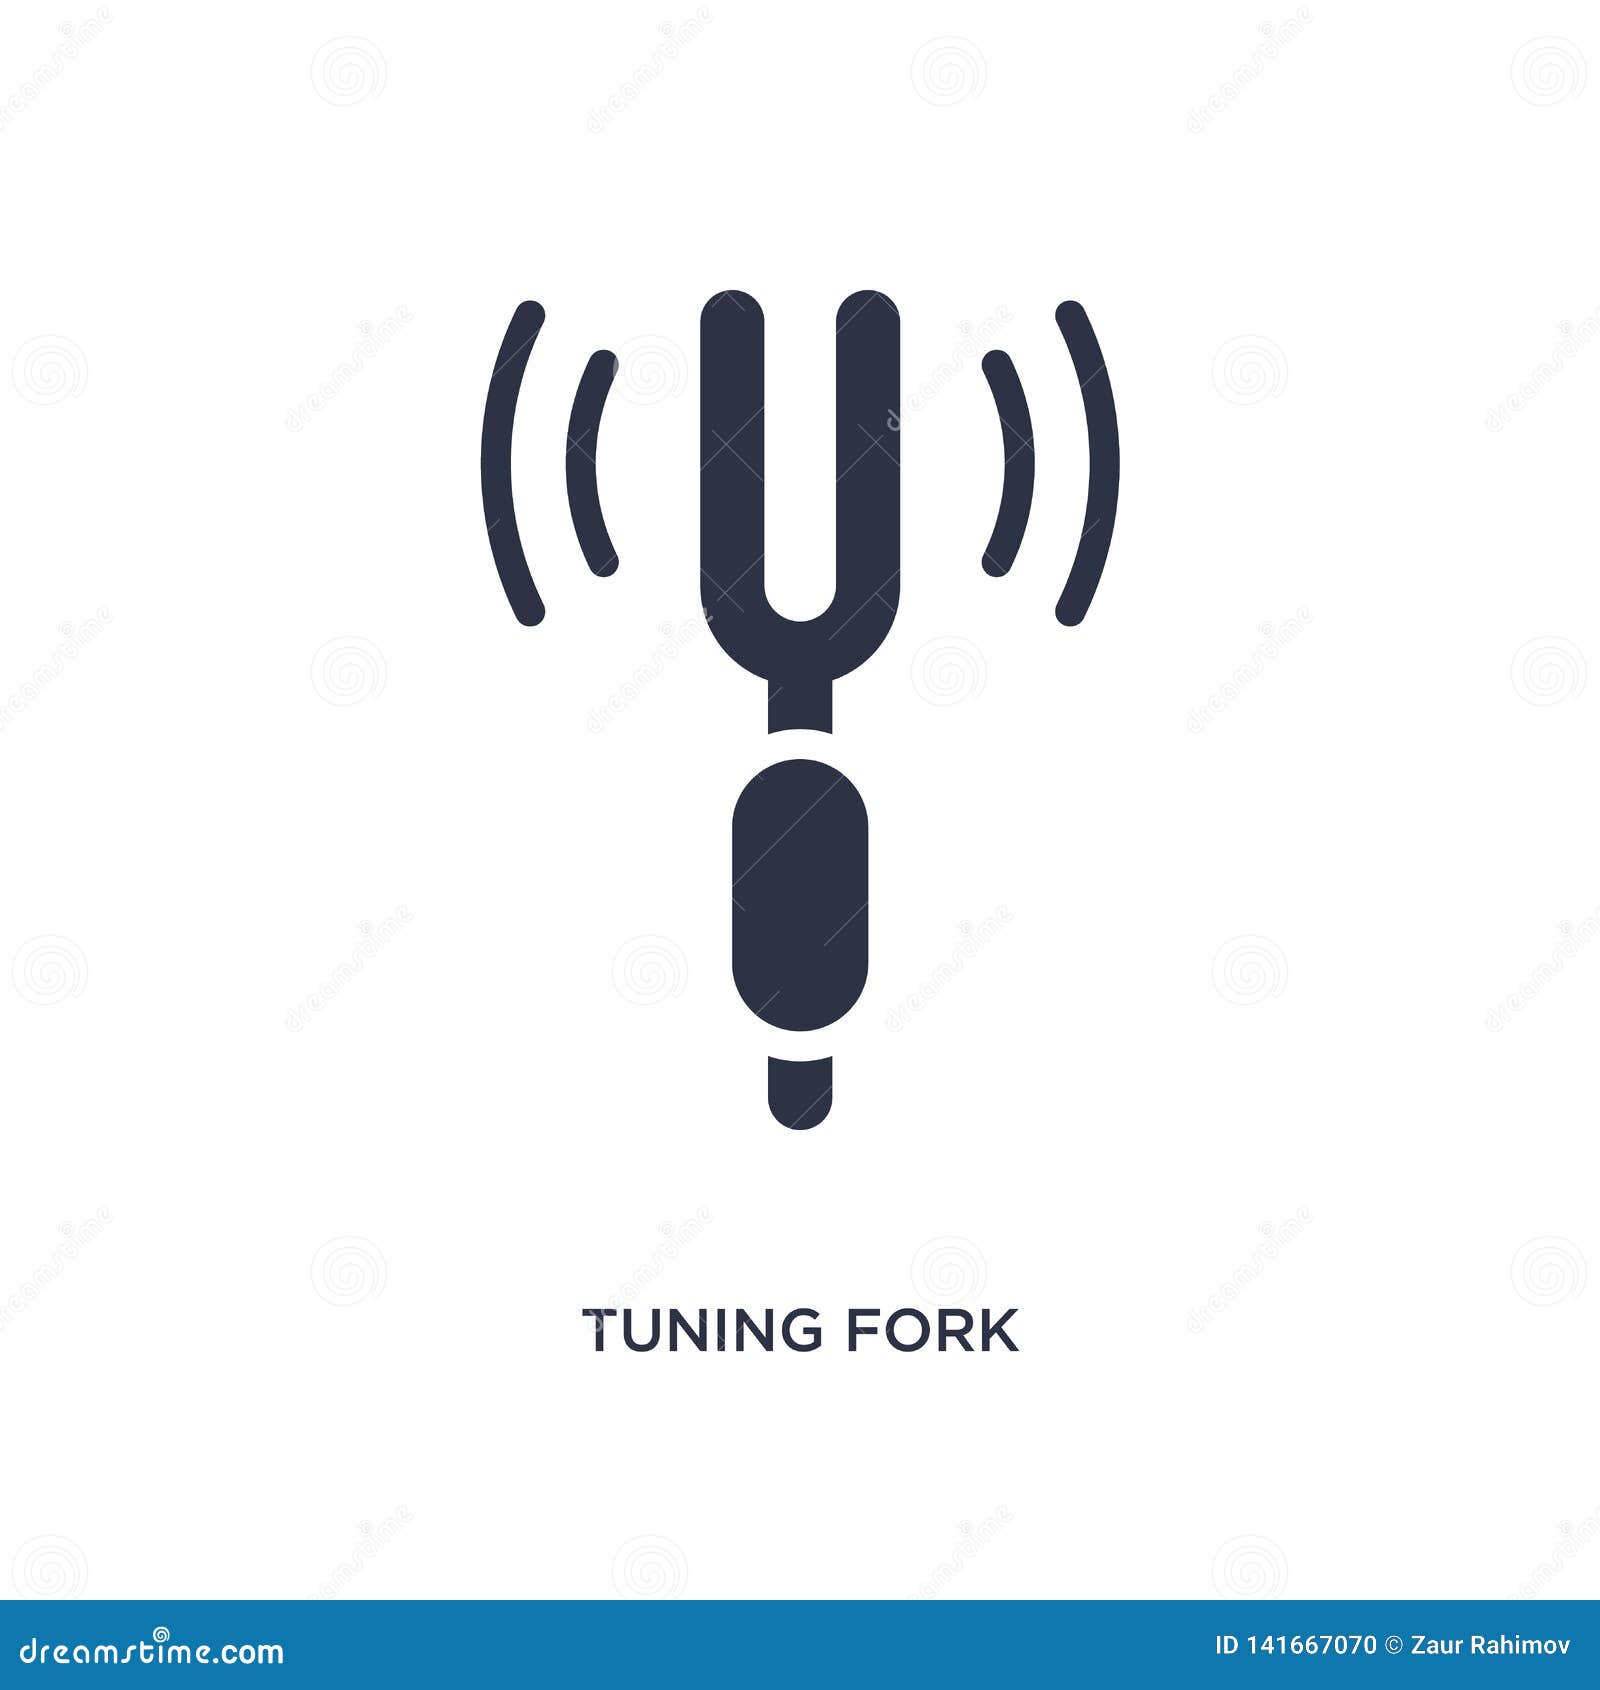 Tune fork. Камертон символ. Камертон рисунок. Tuner fork symbol. Камертон вектор.